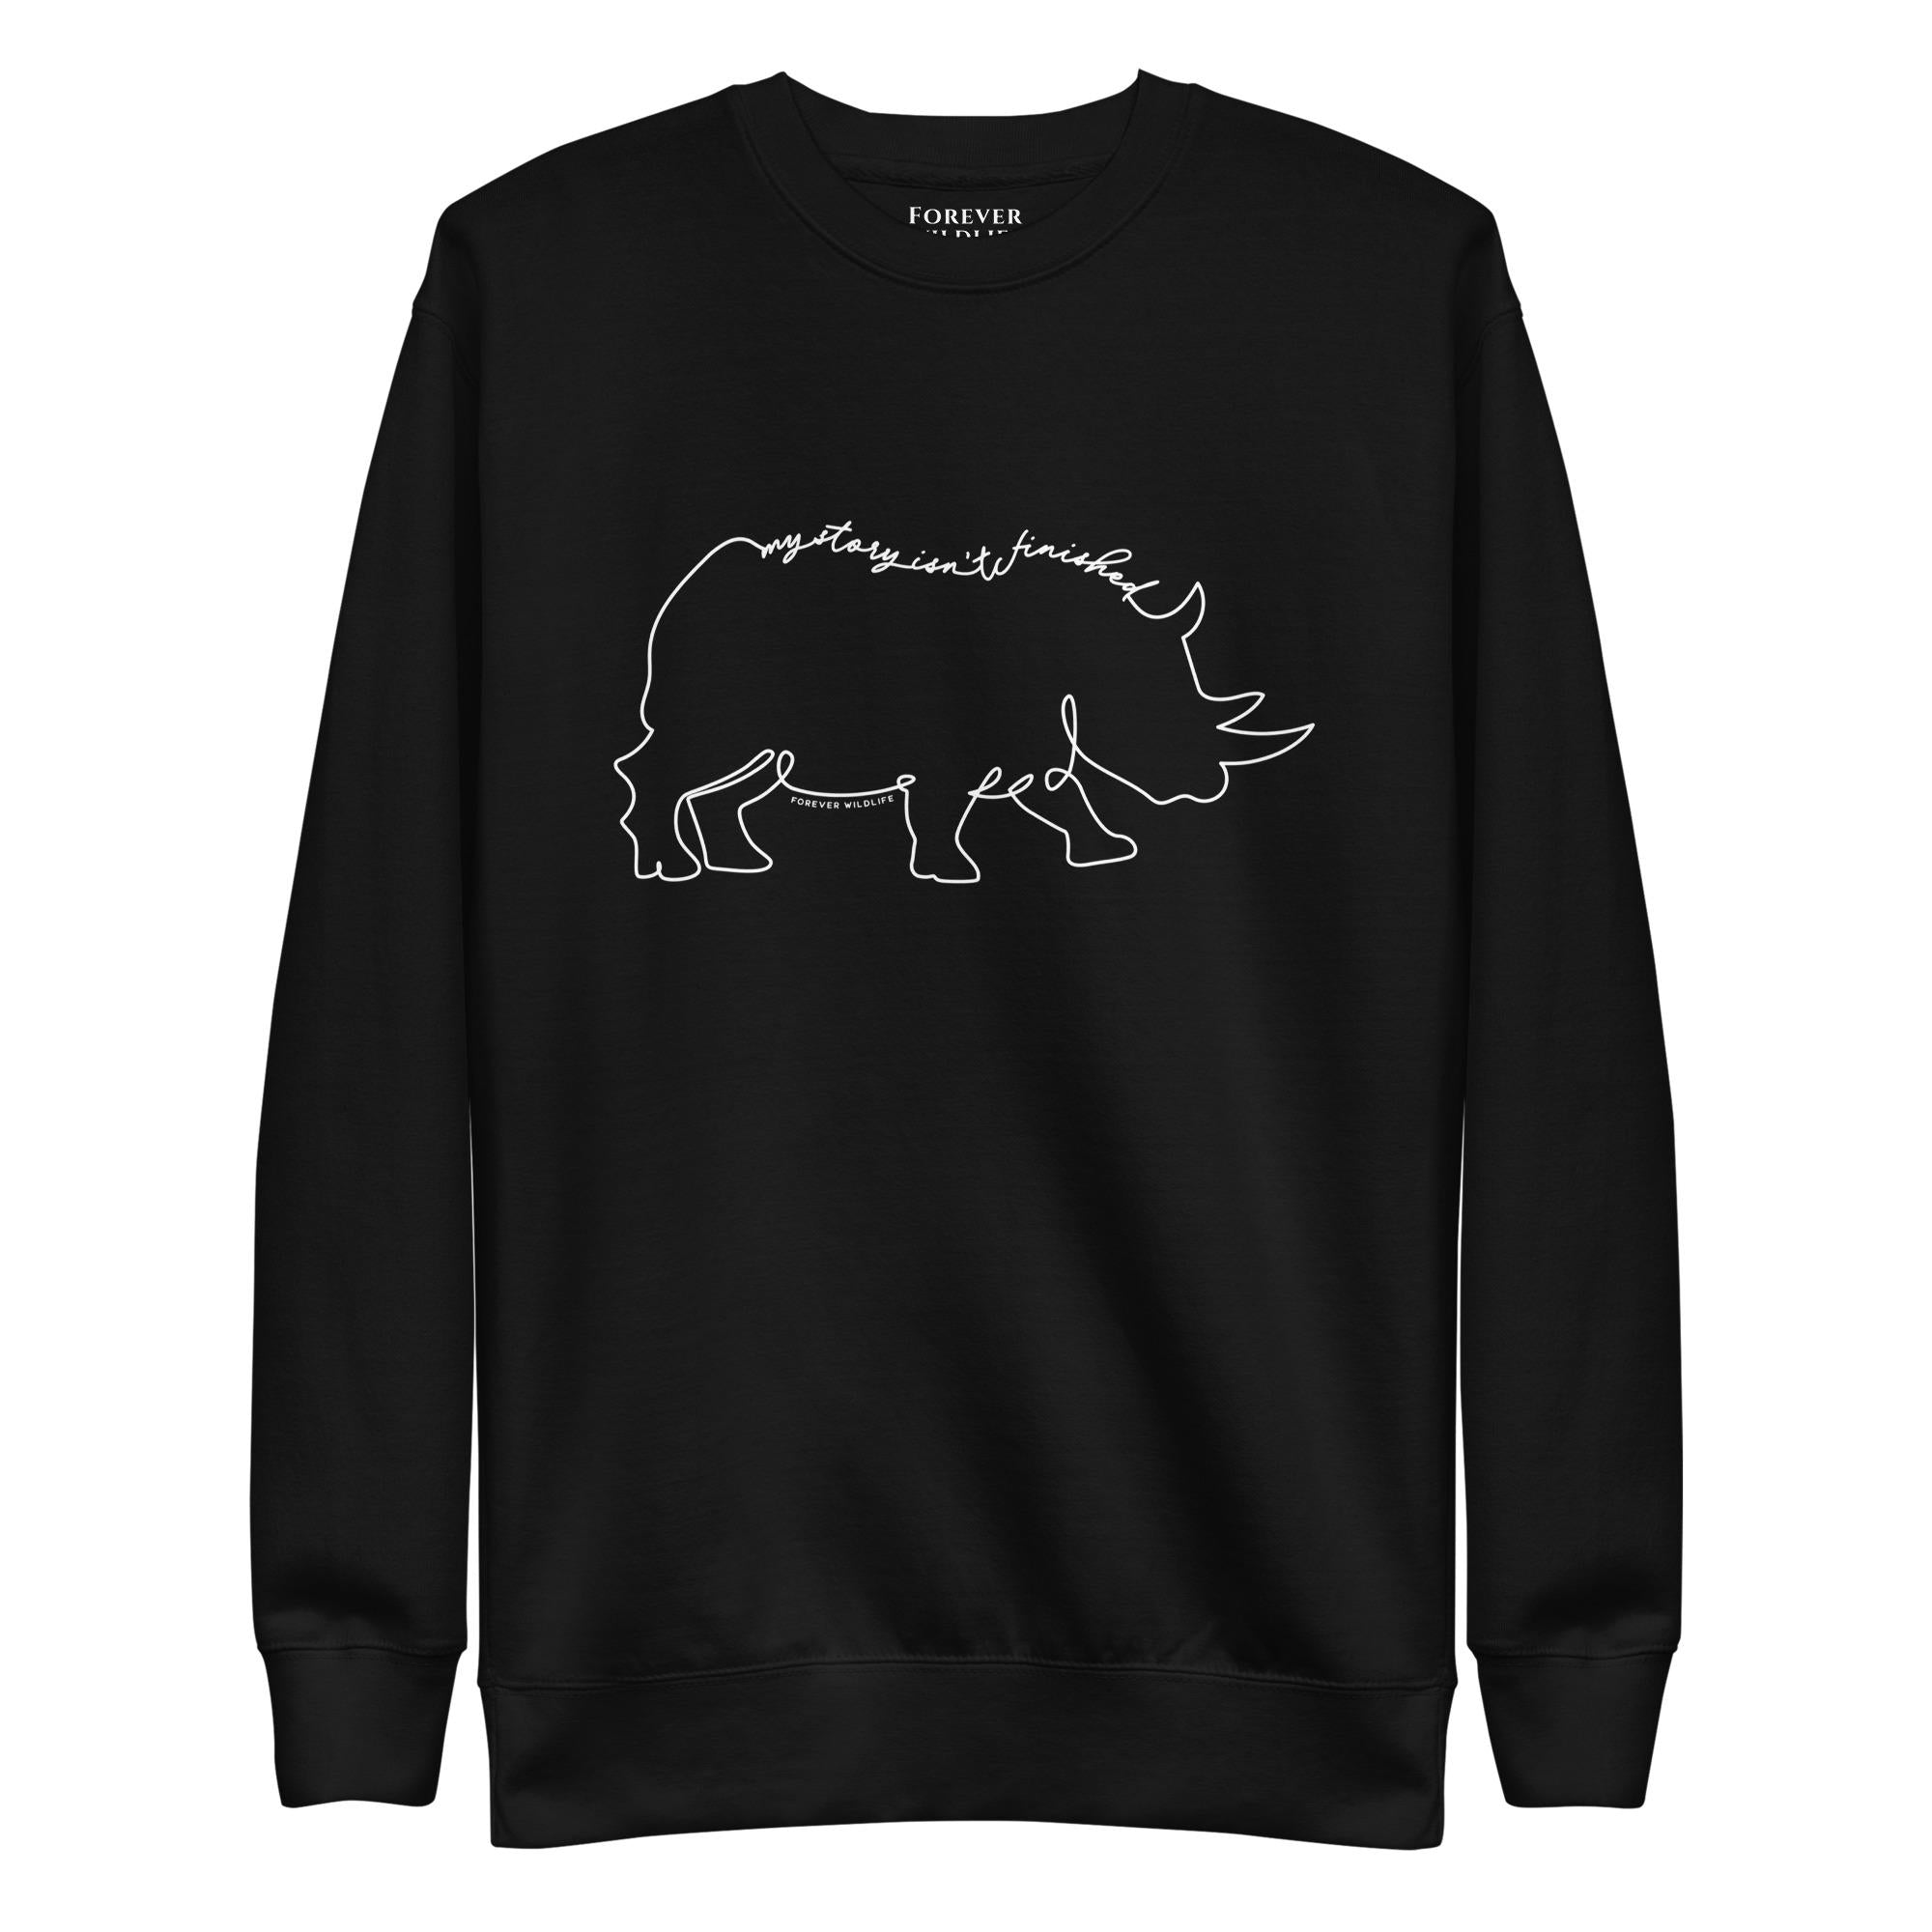 Rhino Sweatshirt in Black-Premium Wildlife Animal Inspiration Sweatshirt Design with 'My Story Isn't Finished' text, part of Wildlife Sweatshirts & Clothing from Forever Wildlife.